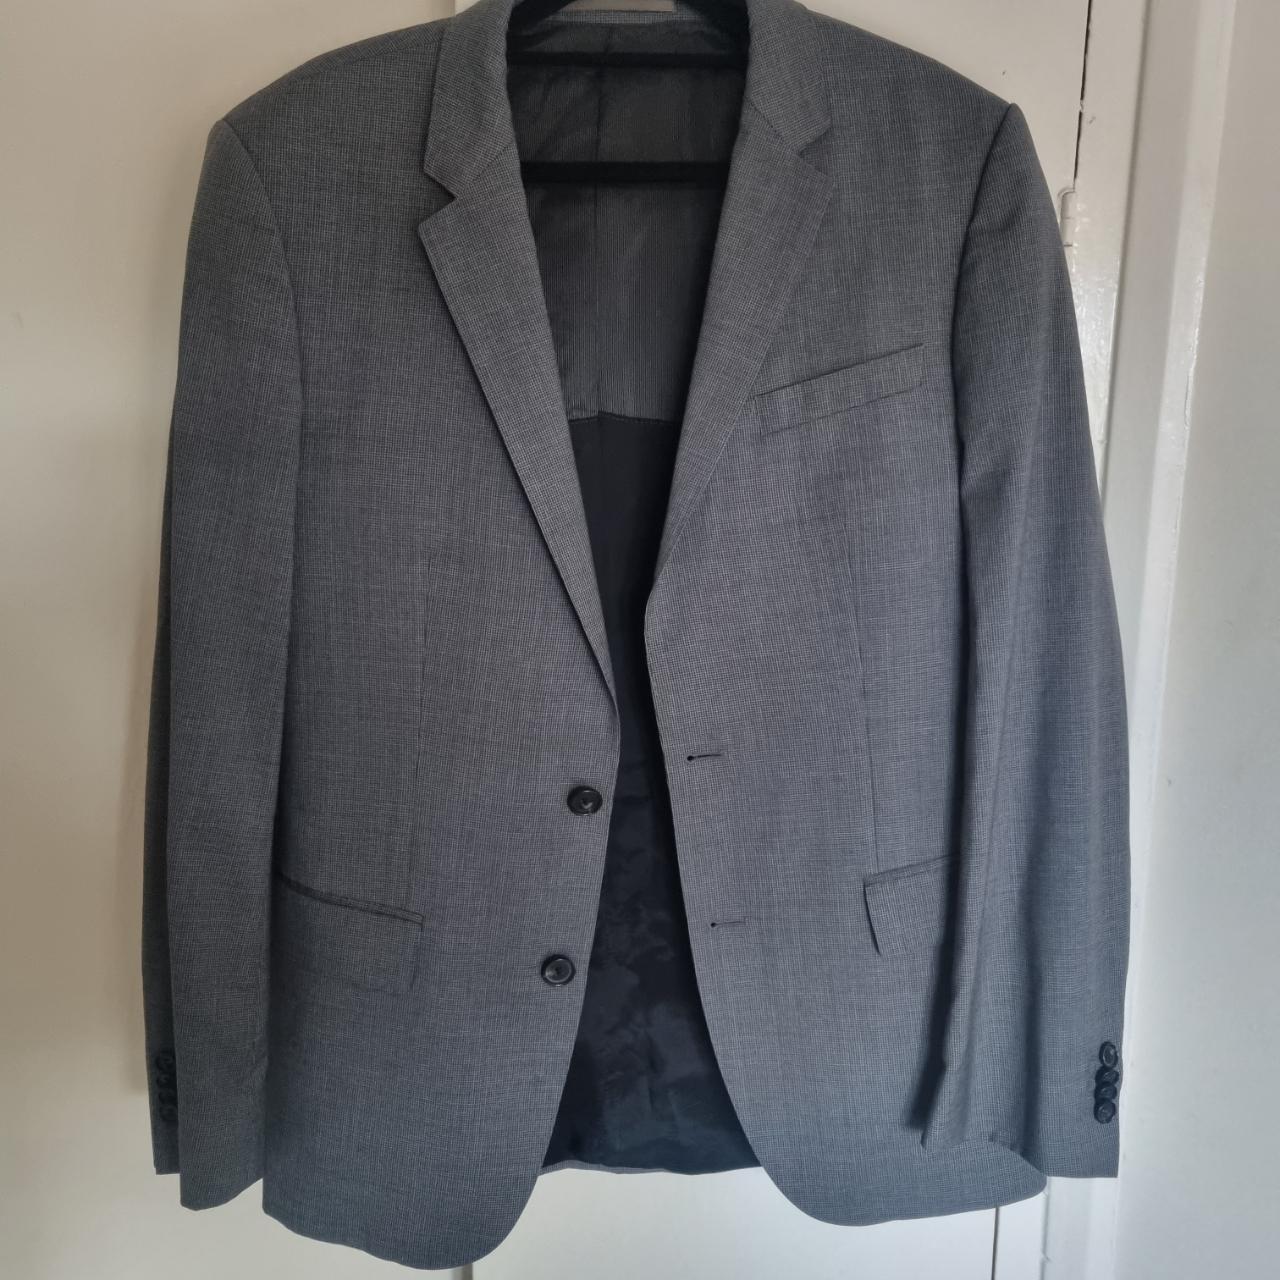 Hugo Boss Blazer or Suit jacket - excellent... - Depop